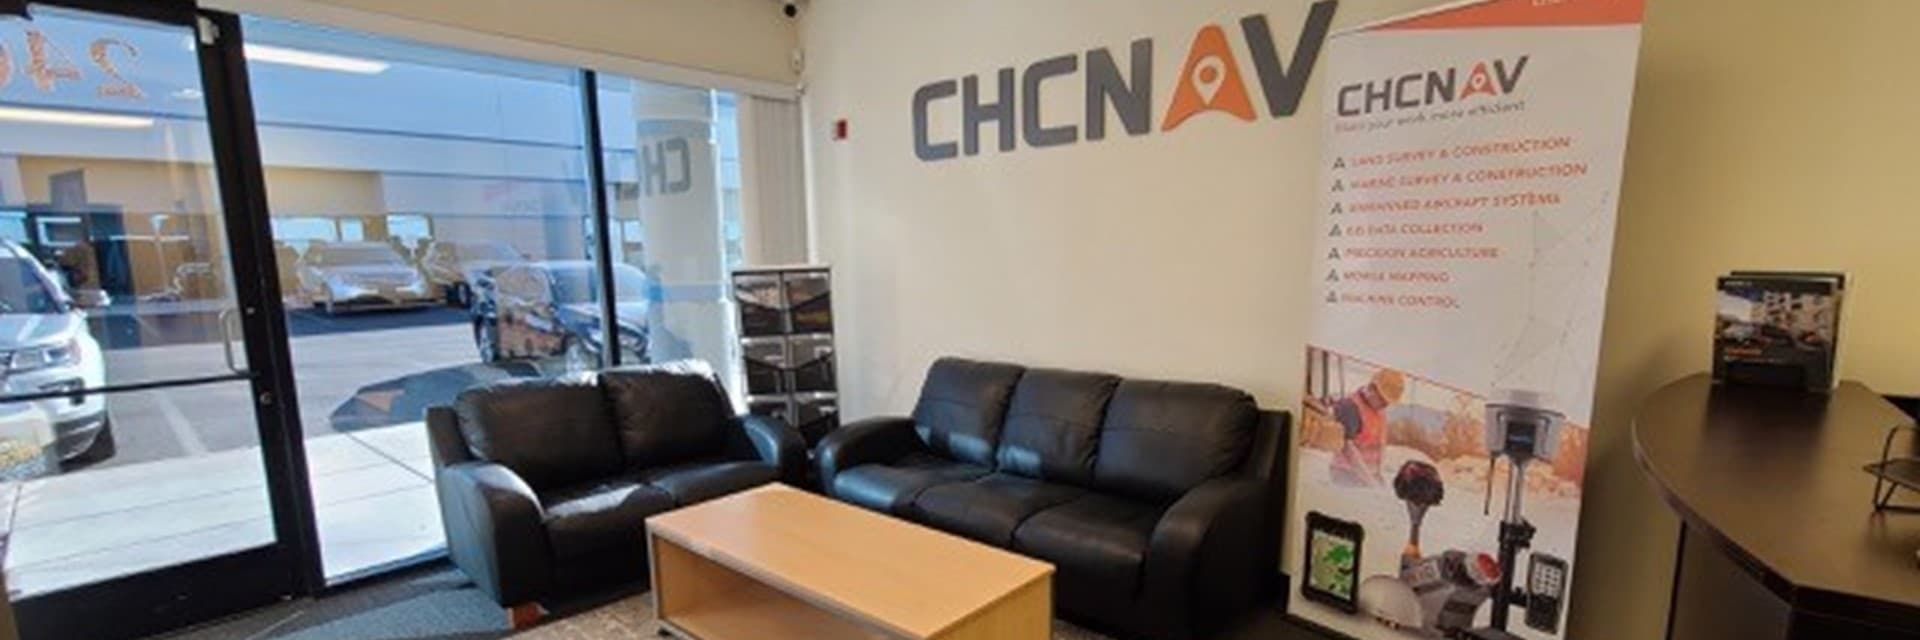 https://www.chcnav.com/uploads/North American Office_banner.jpg